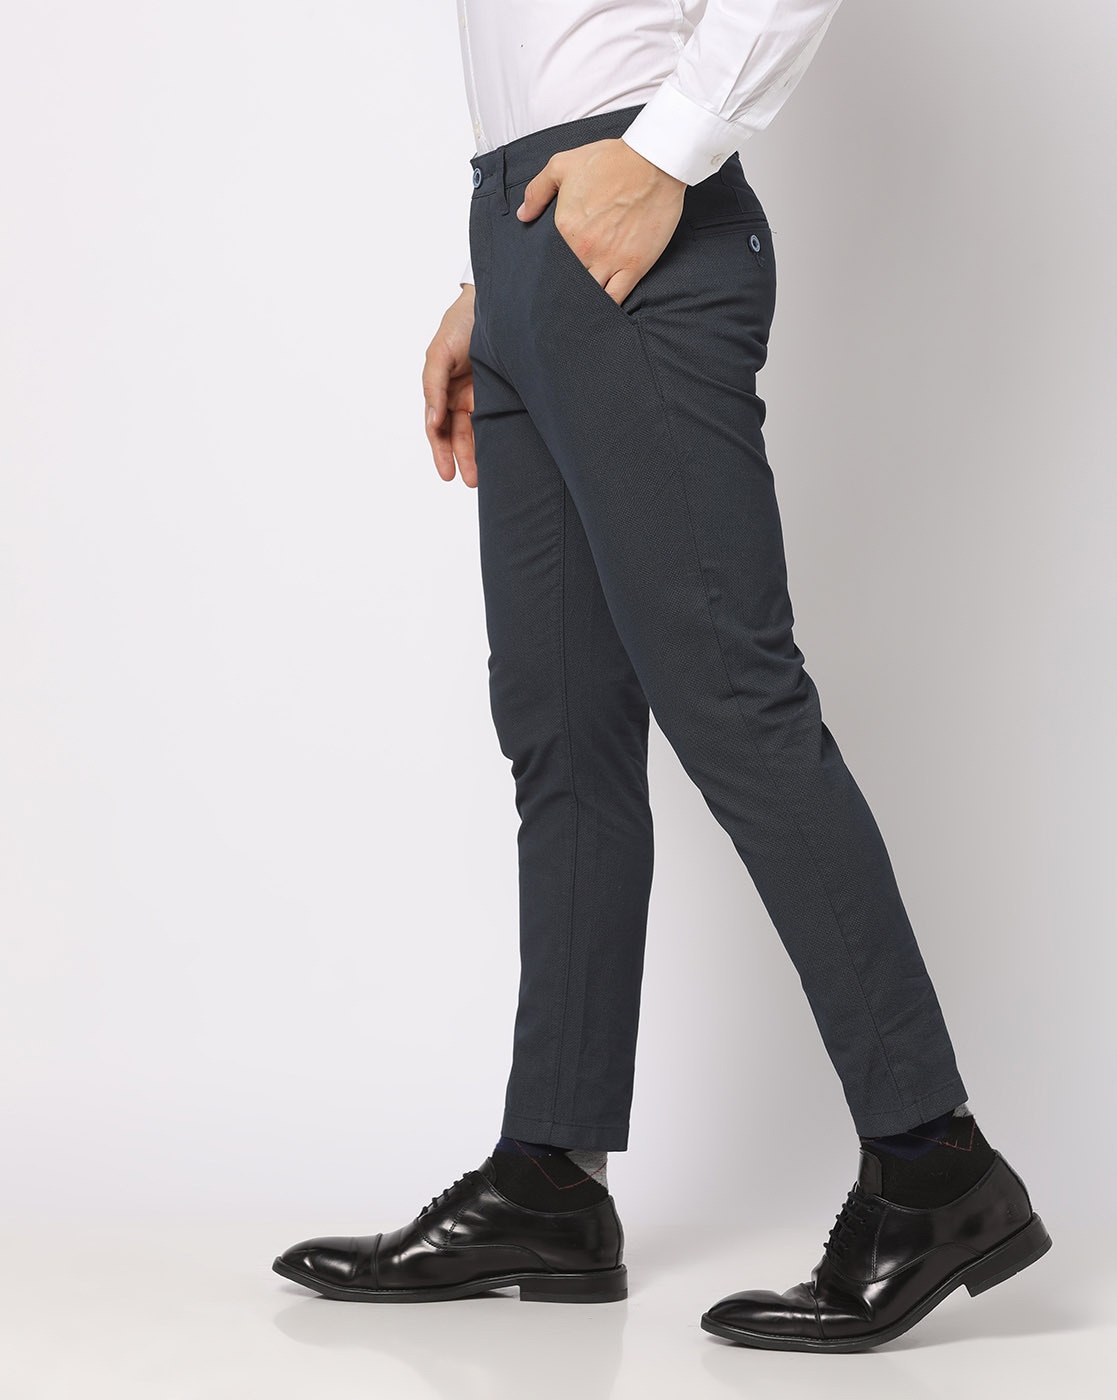 Topman skinny smart pants with elasticated waistband in navy | ASOS